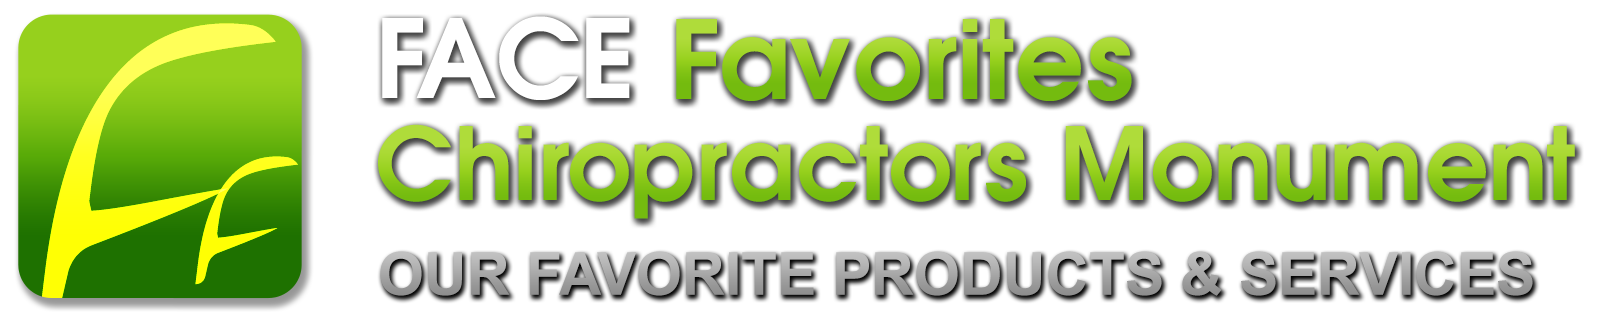 face favorites chiropractors monument logo